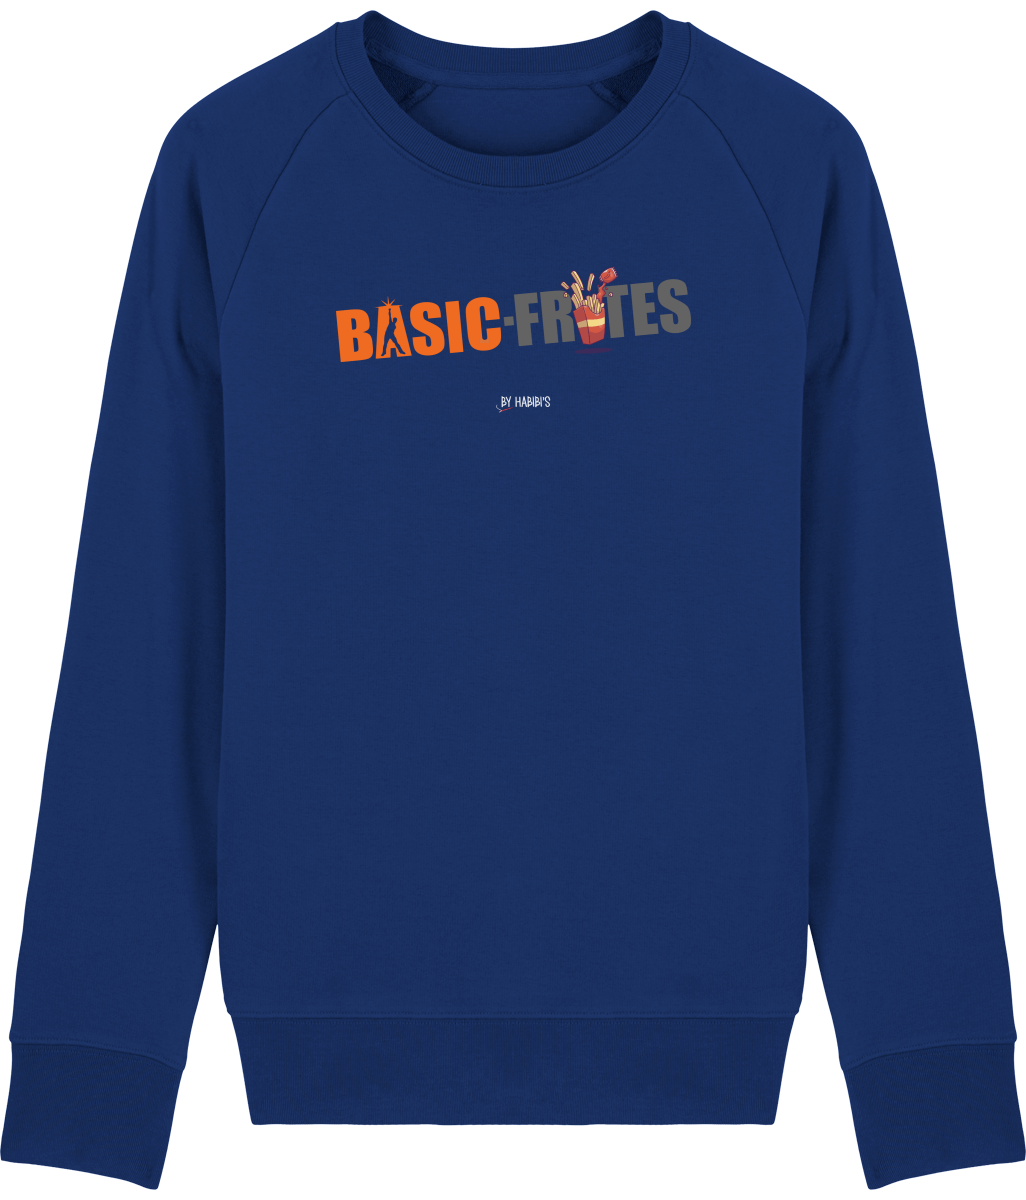 Homme>Sweatshirts - Sweat Homme <br> Basic Frites